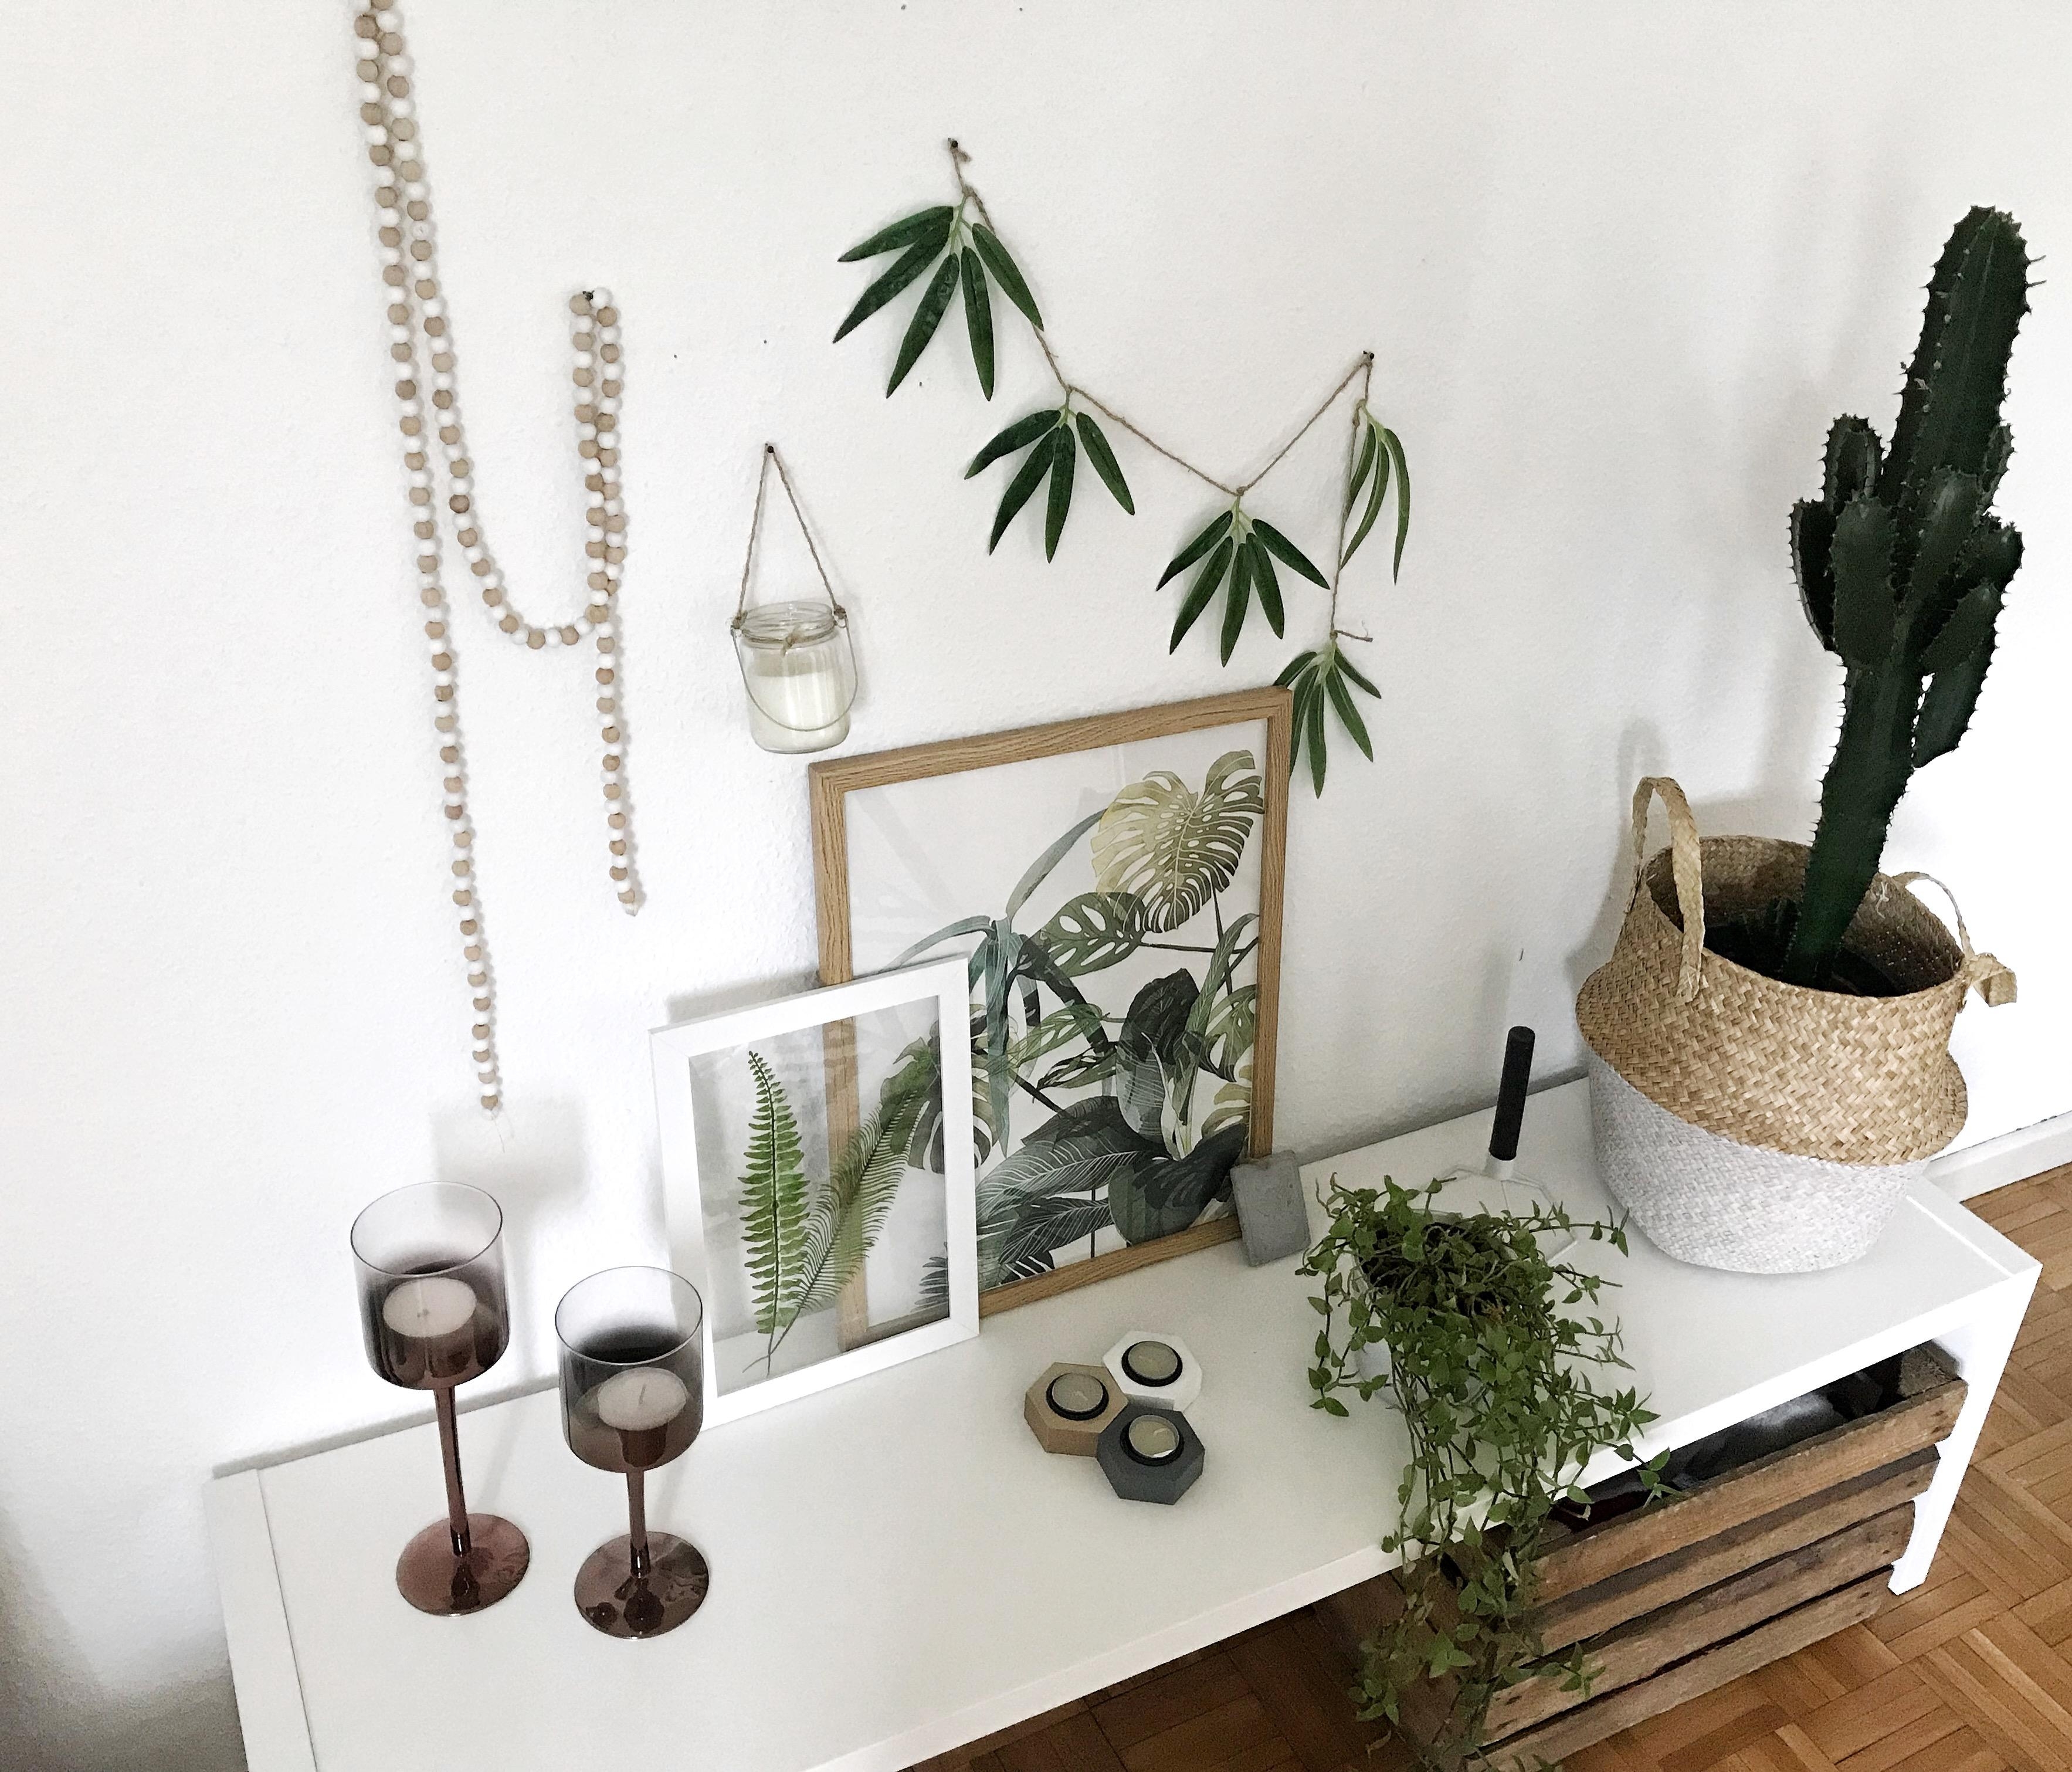 Urbanjungle #wohnzimmer #decor #selfmade #plants #cactus